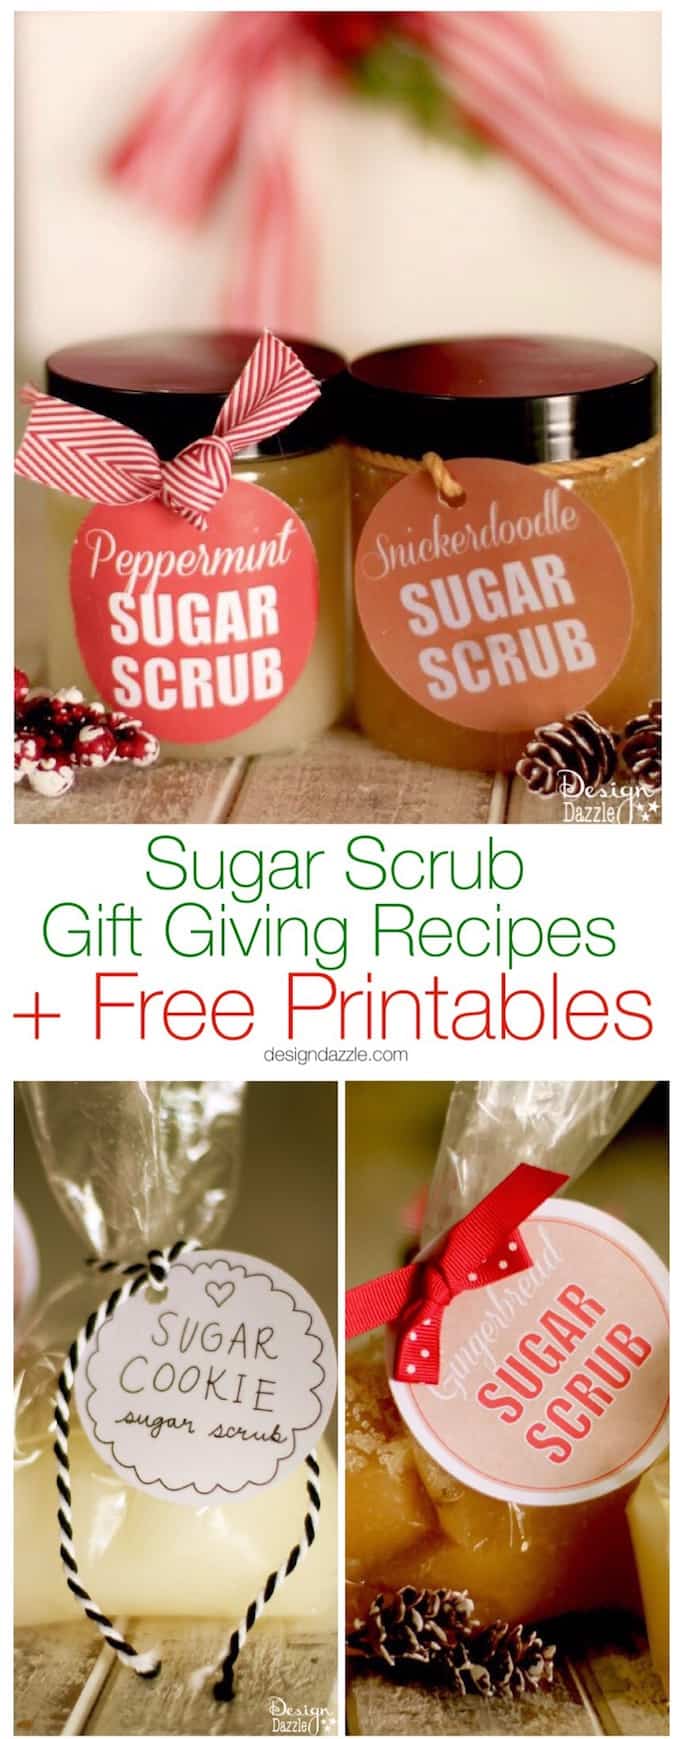 Sugar Scrub Christmas Gift Recipes and Free Printables by Toni Roberts